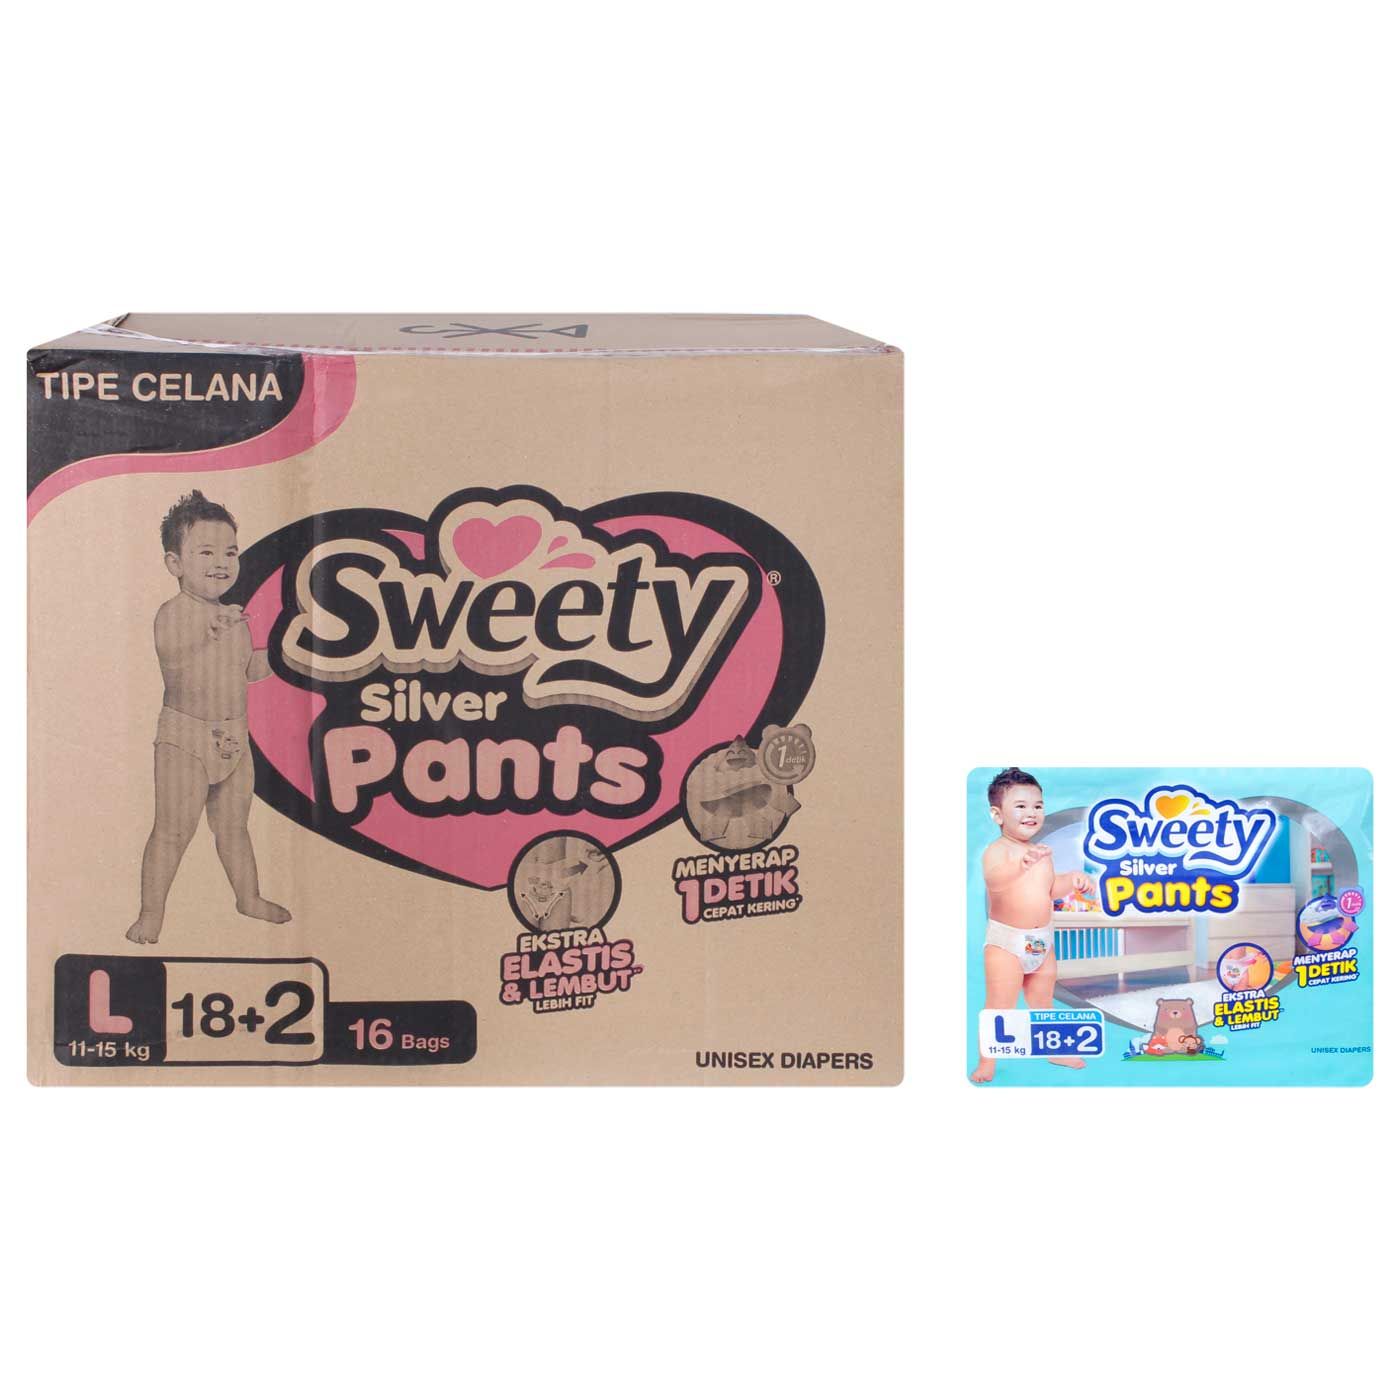 Sweety Silver Pants L 18+2's - 3